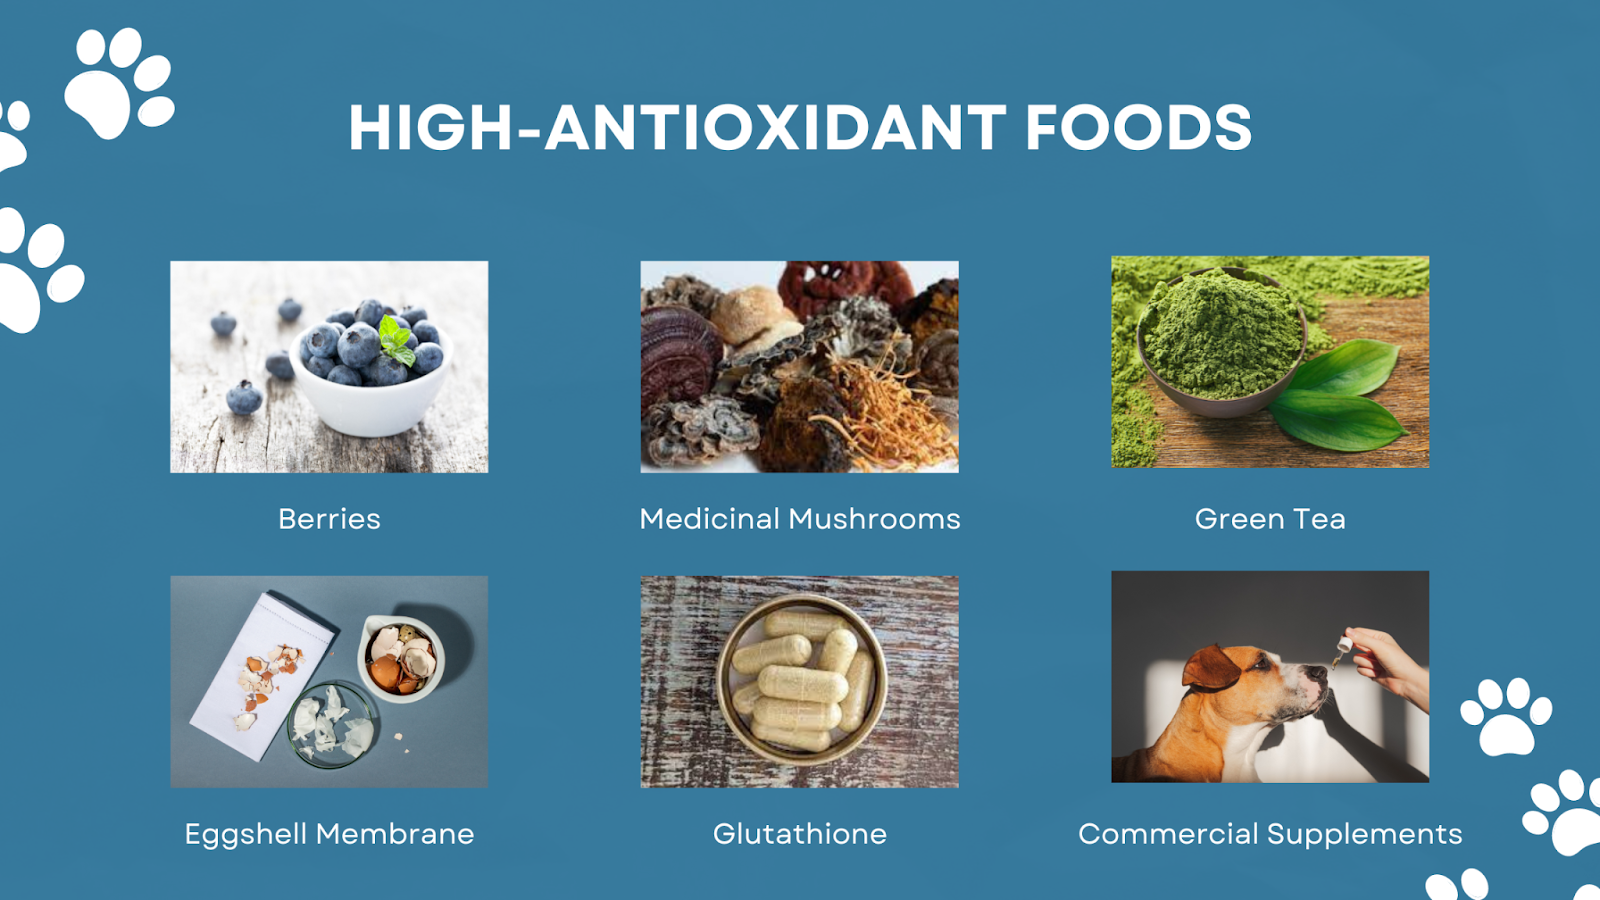 High-antioxidant foods